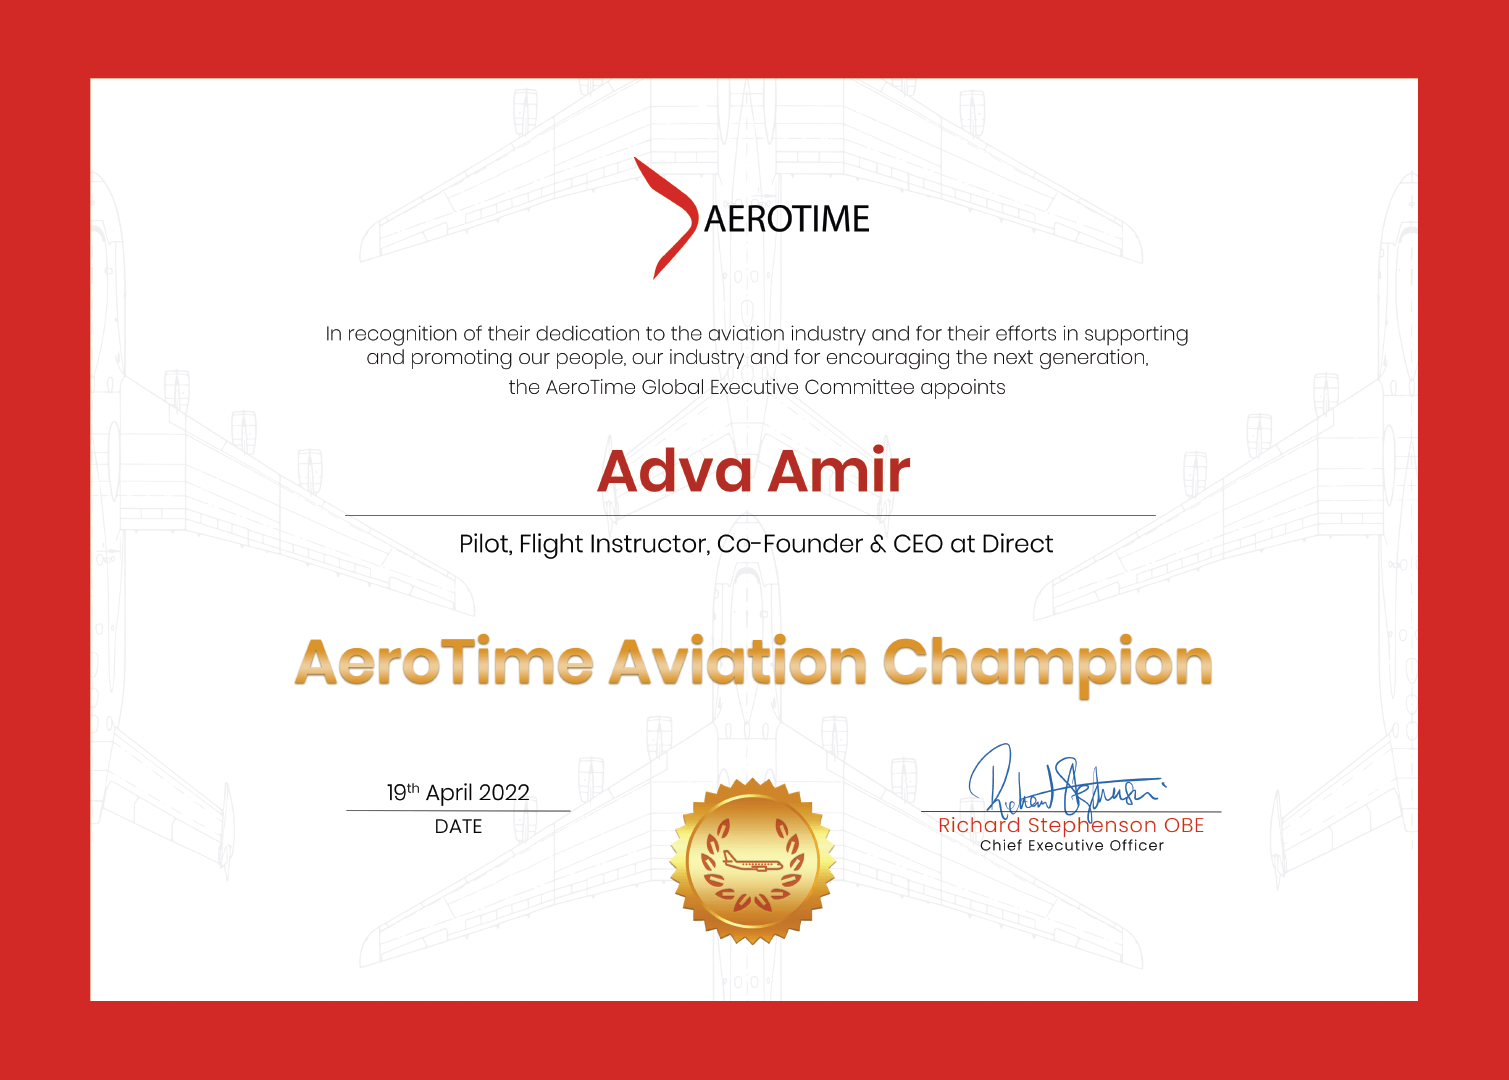 Adva Amir, AeroTime Aviation Champion